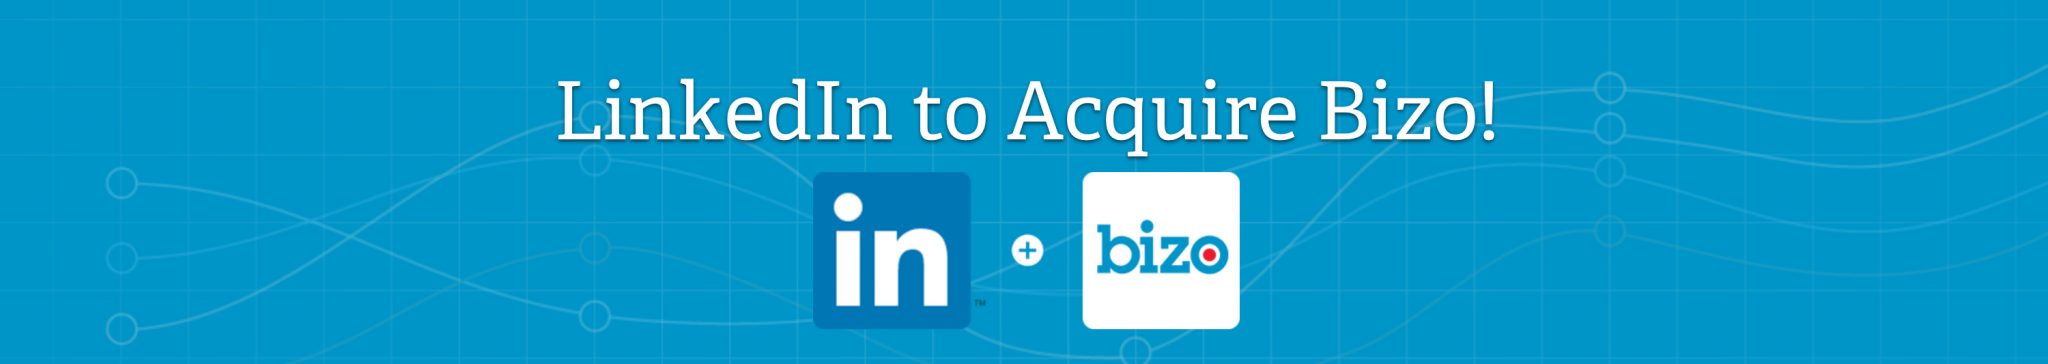 Bizo Acquired by LinkedIn